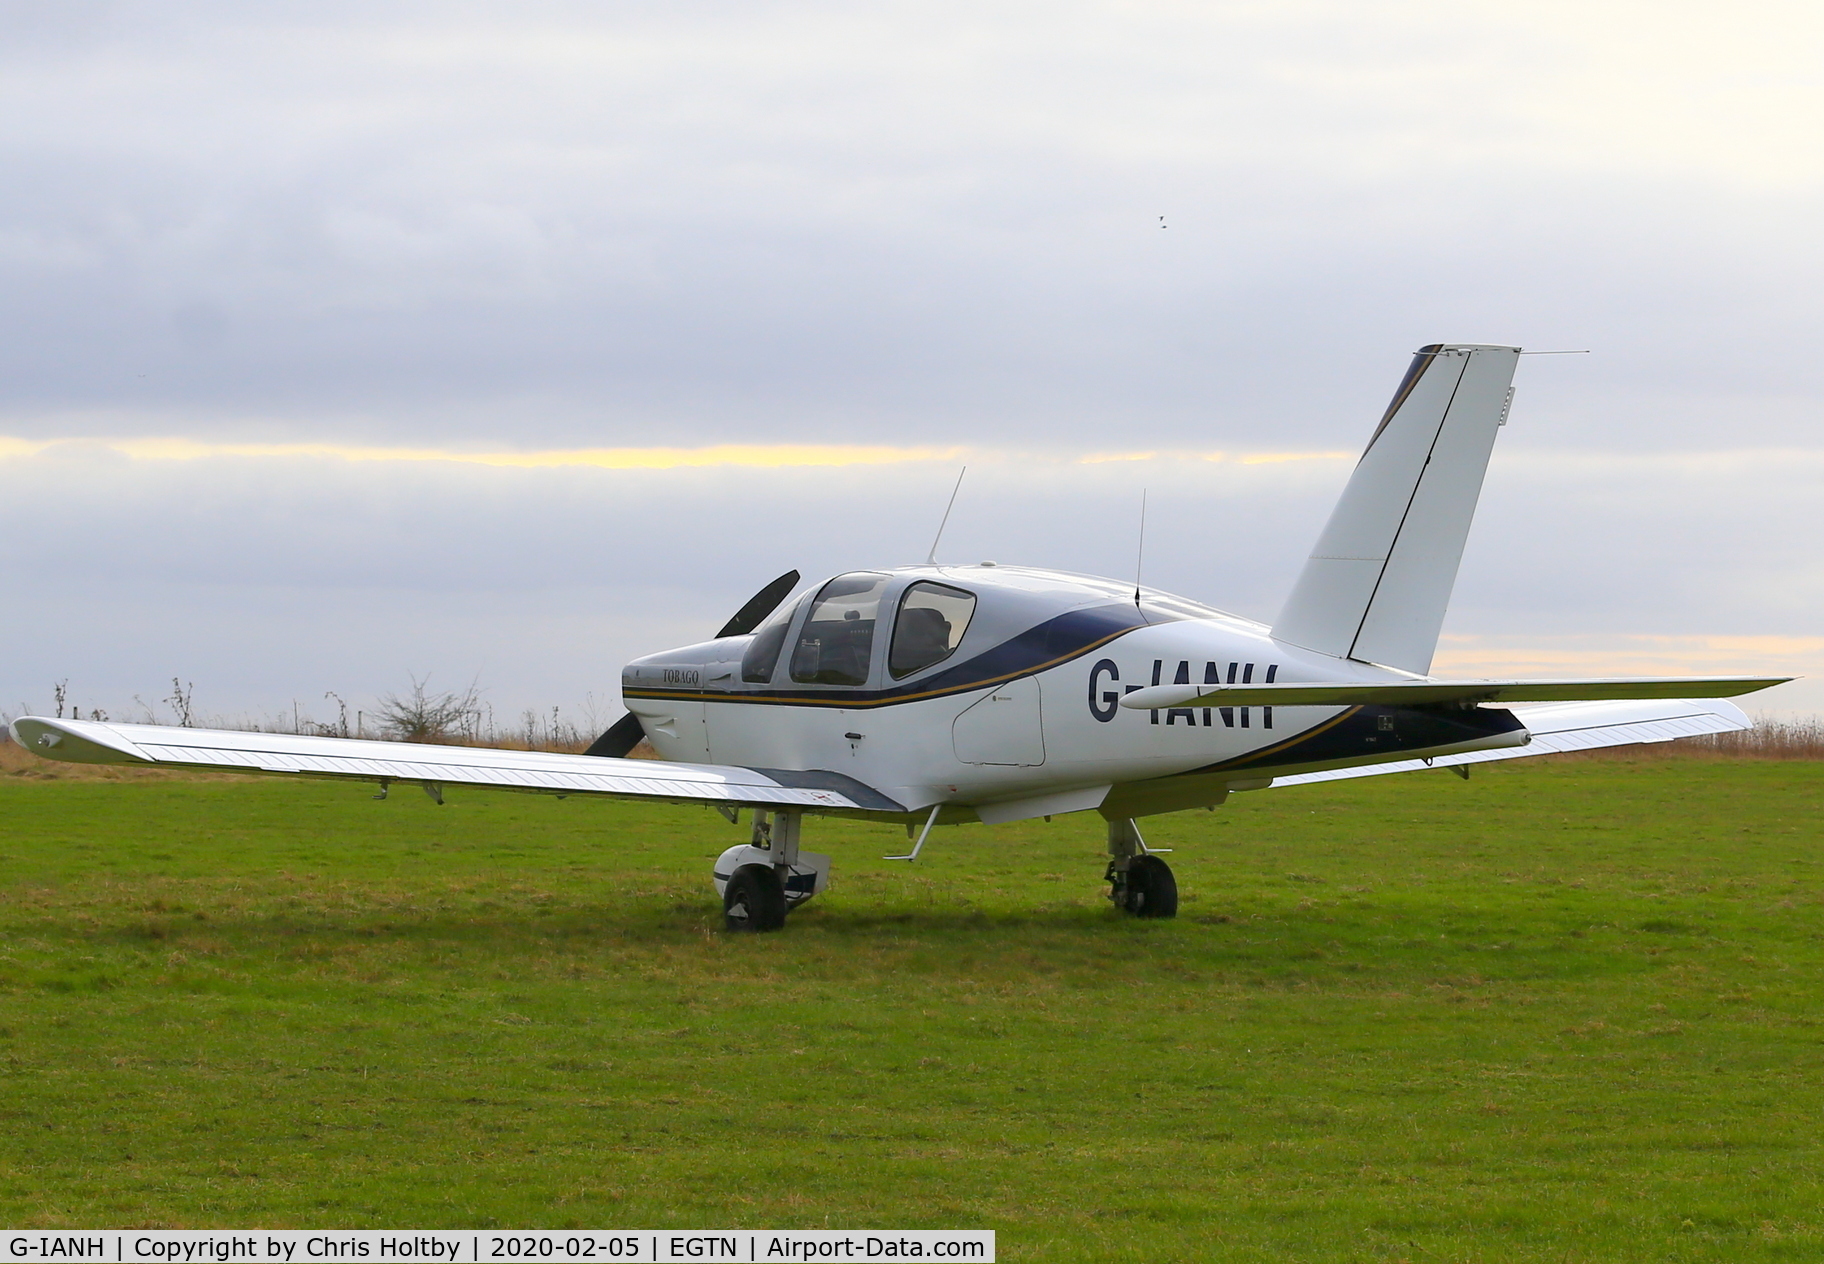 G-IANH, 2000 Socata TB-10 Tobago C/N 1843, Parked at Enstone Airfield, Oxon.